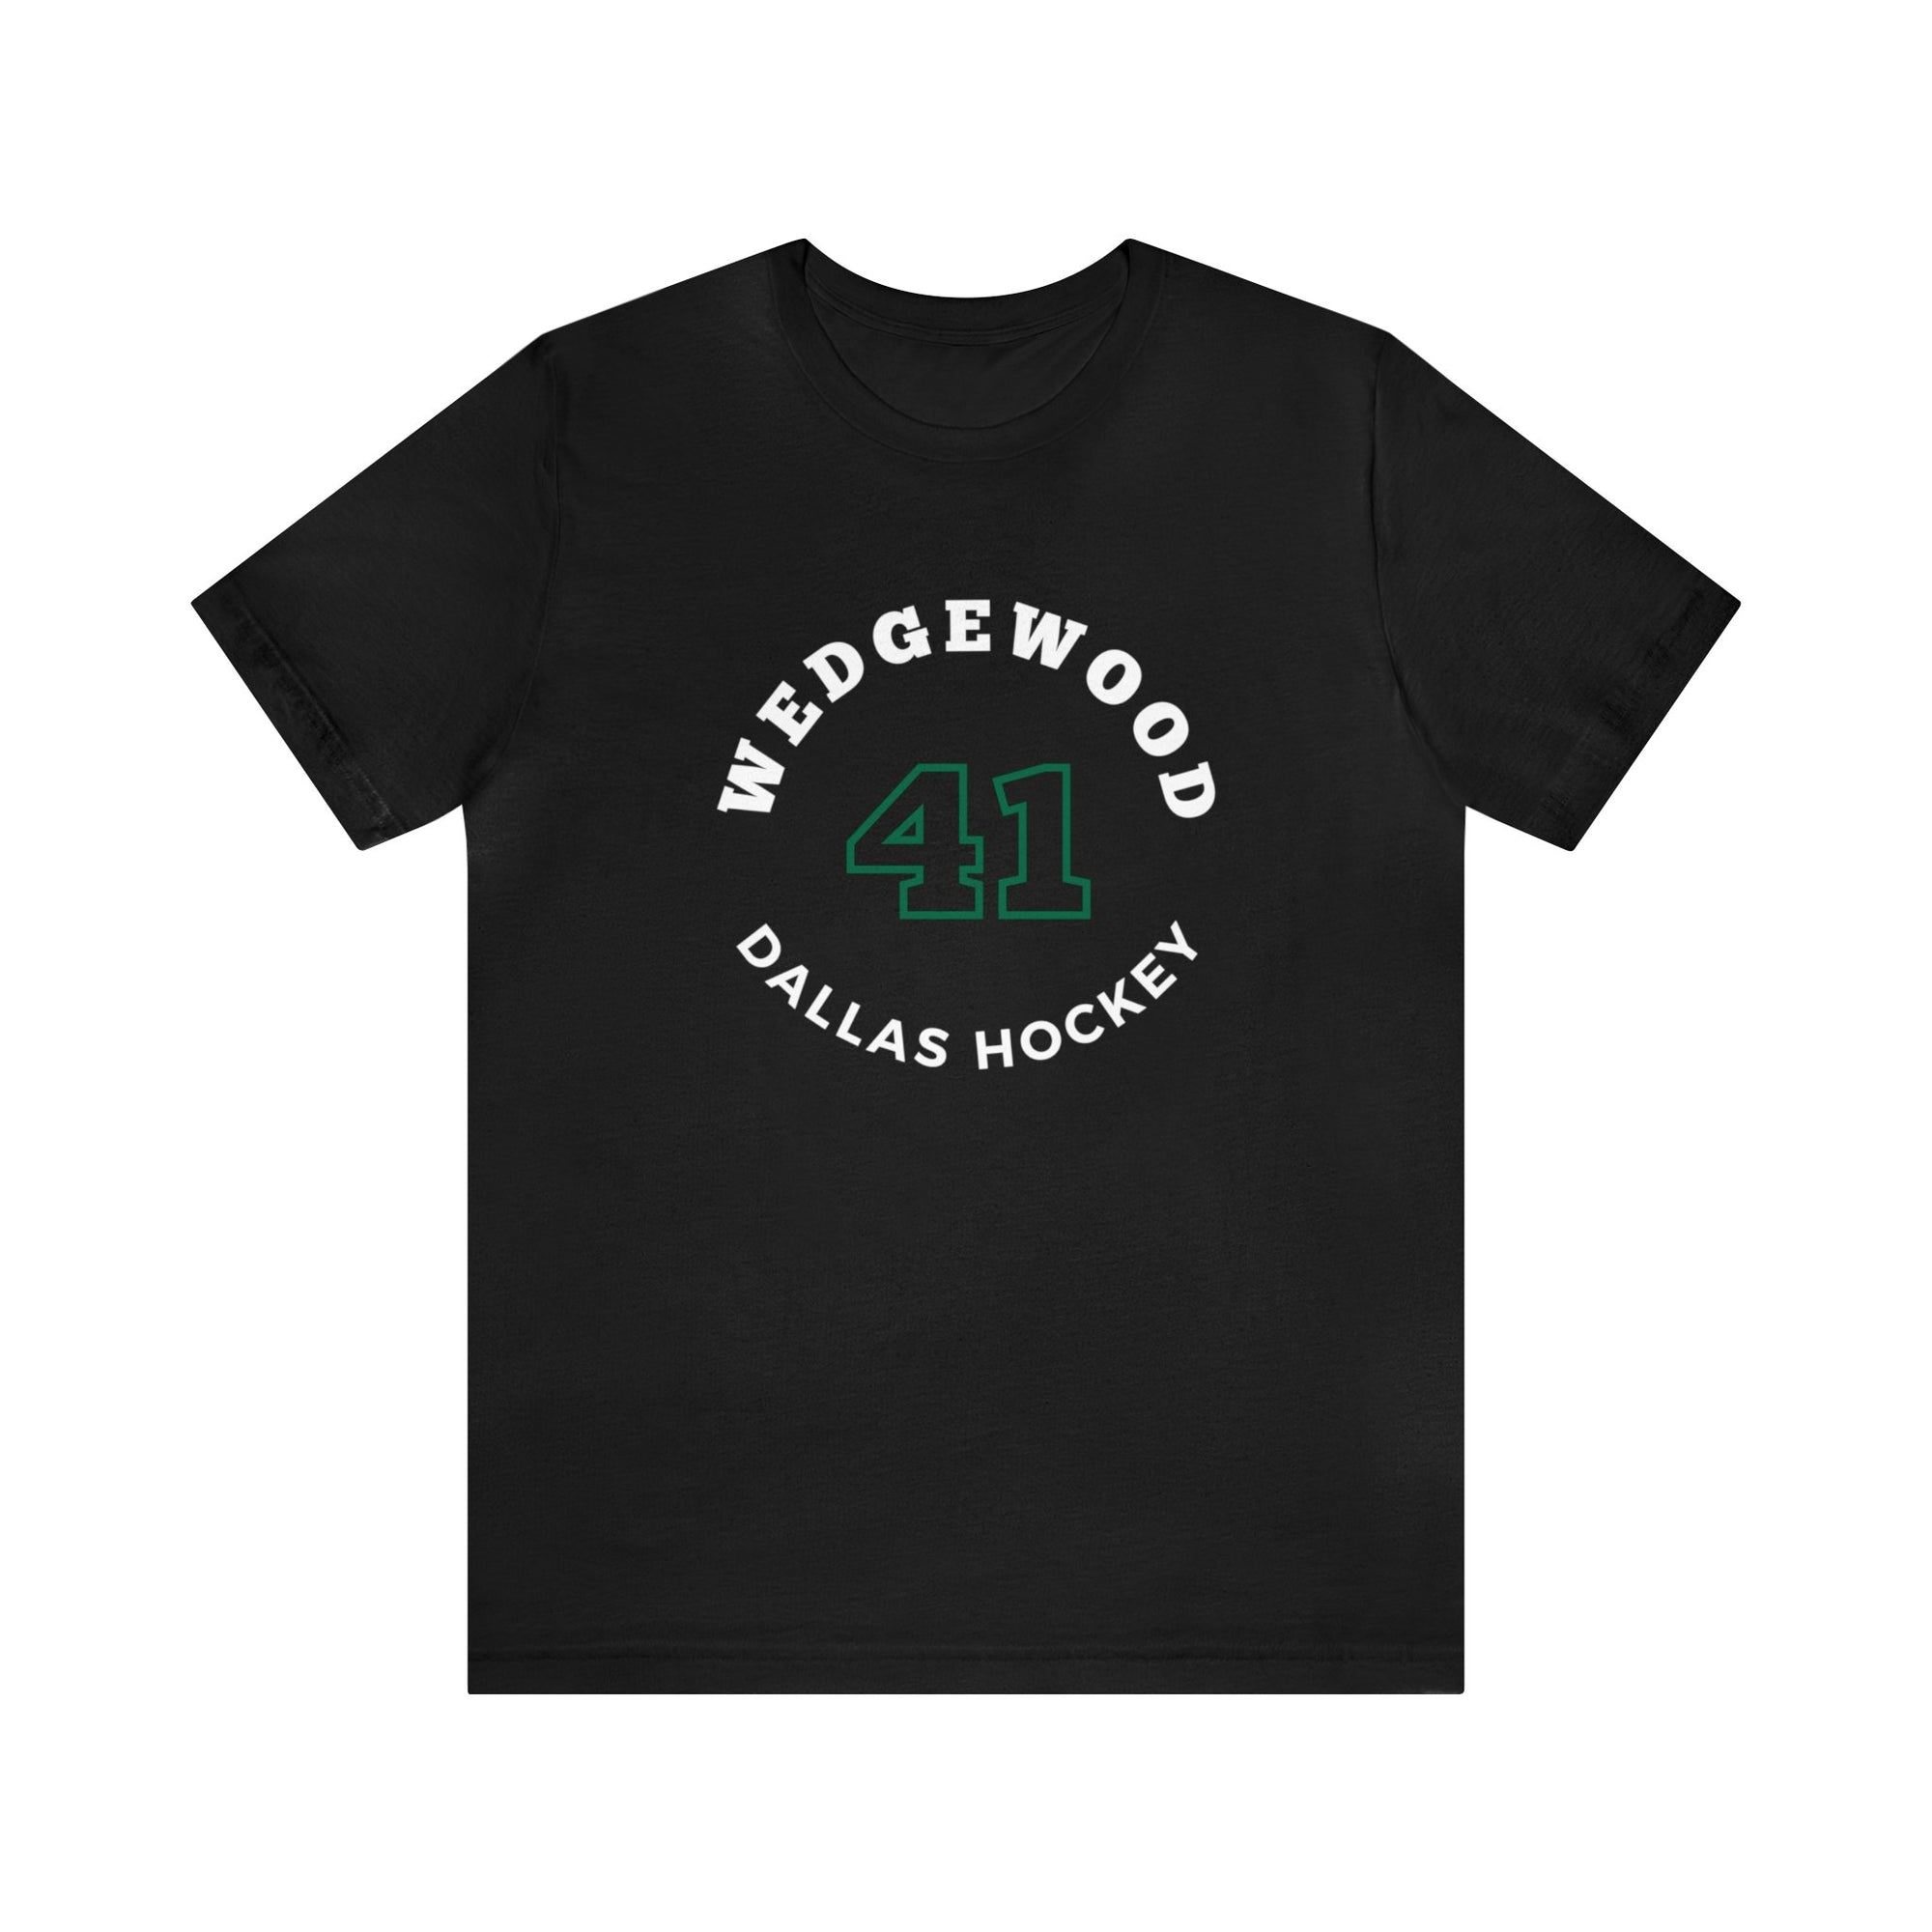 Wedgewood 41 Dallas Hockey Number Arch Design Unisex T-Shirt